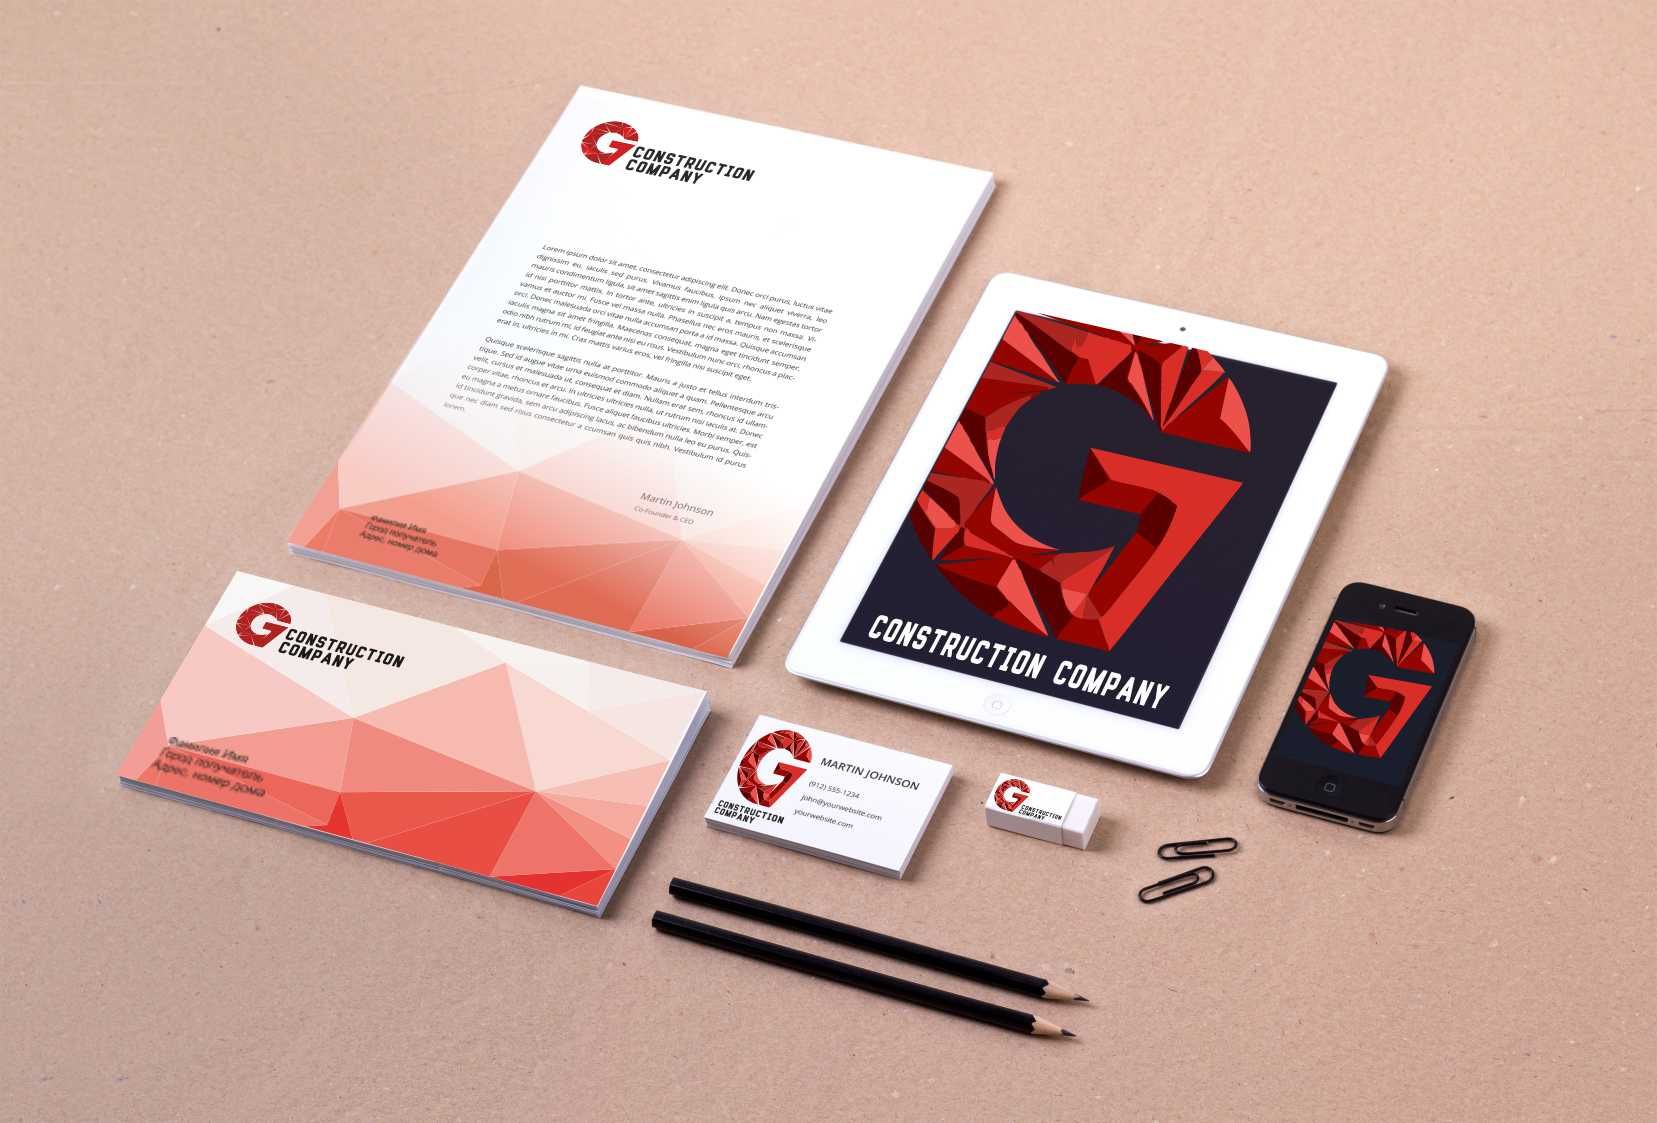 Логотип для G7 - дизайнер Mila_Tomski